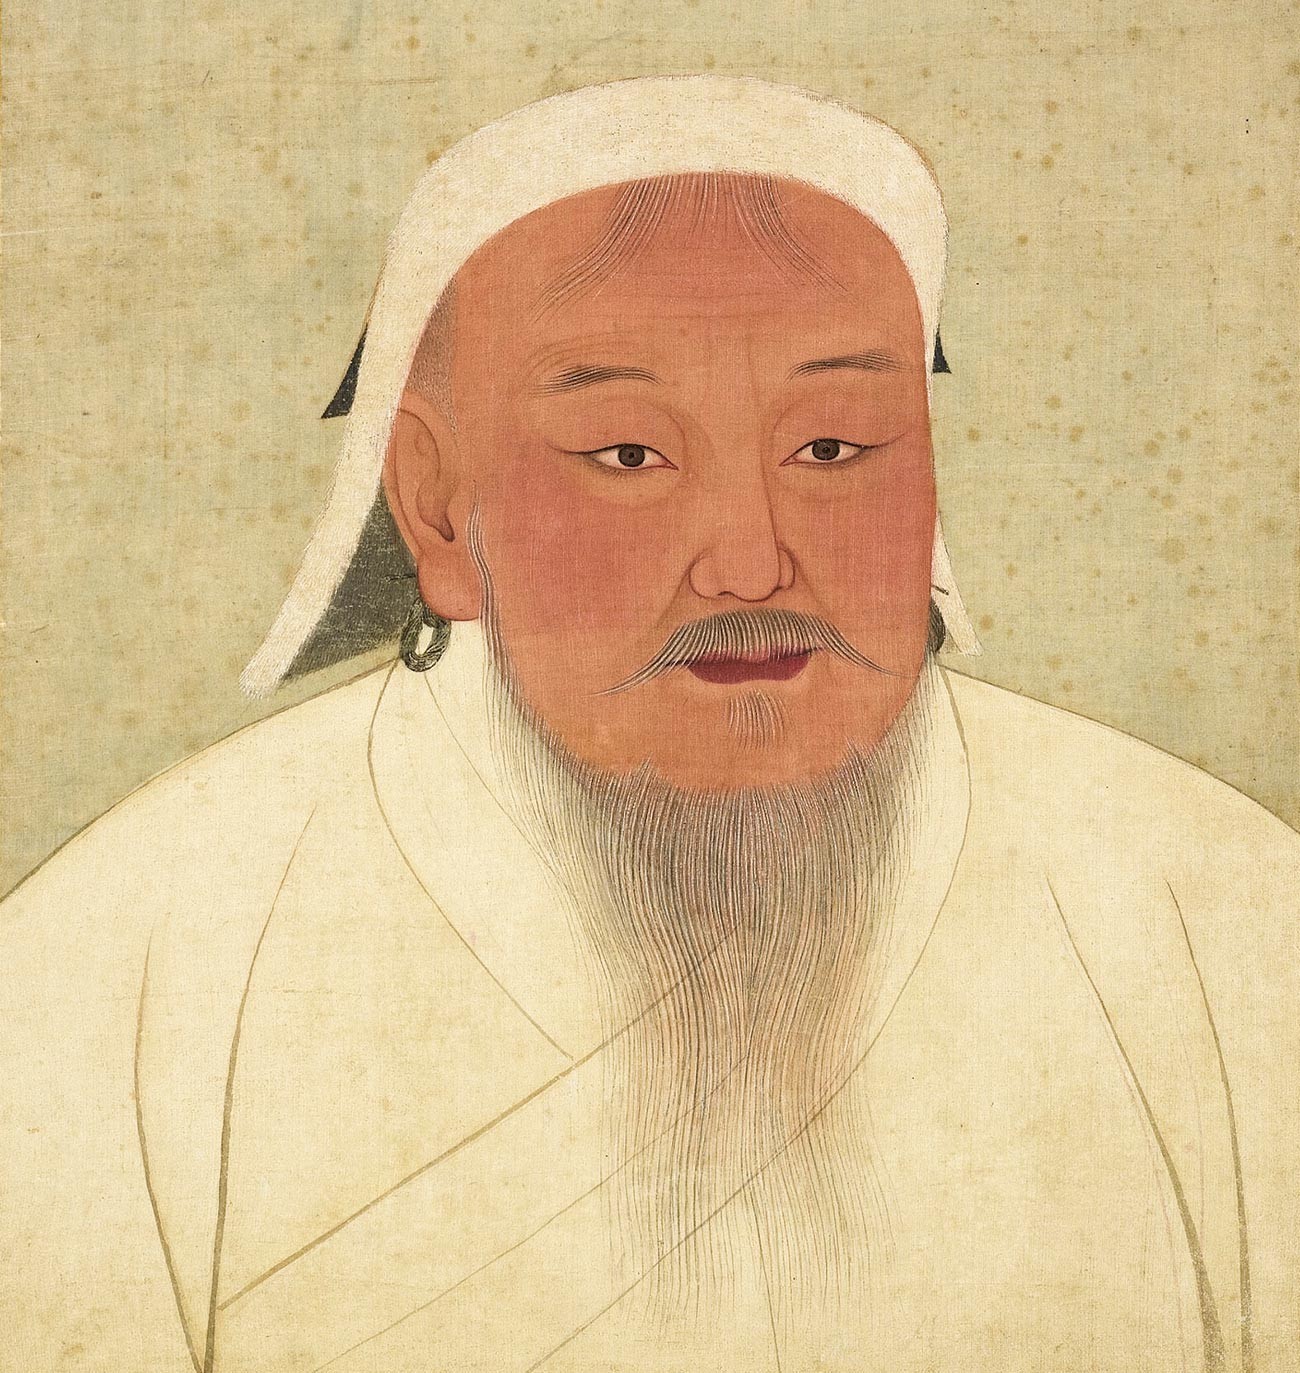 Џингис Хан